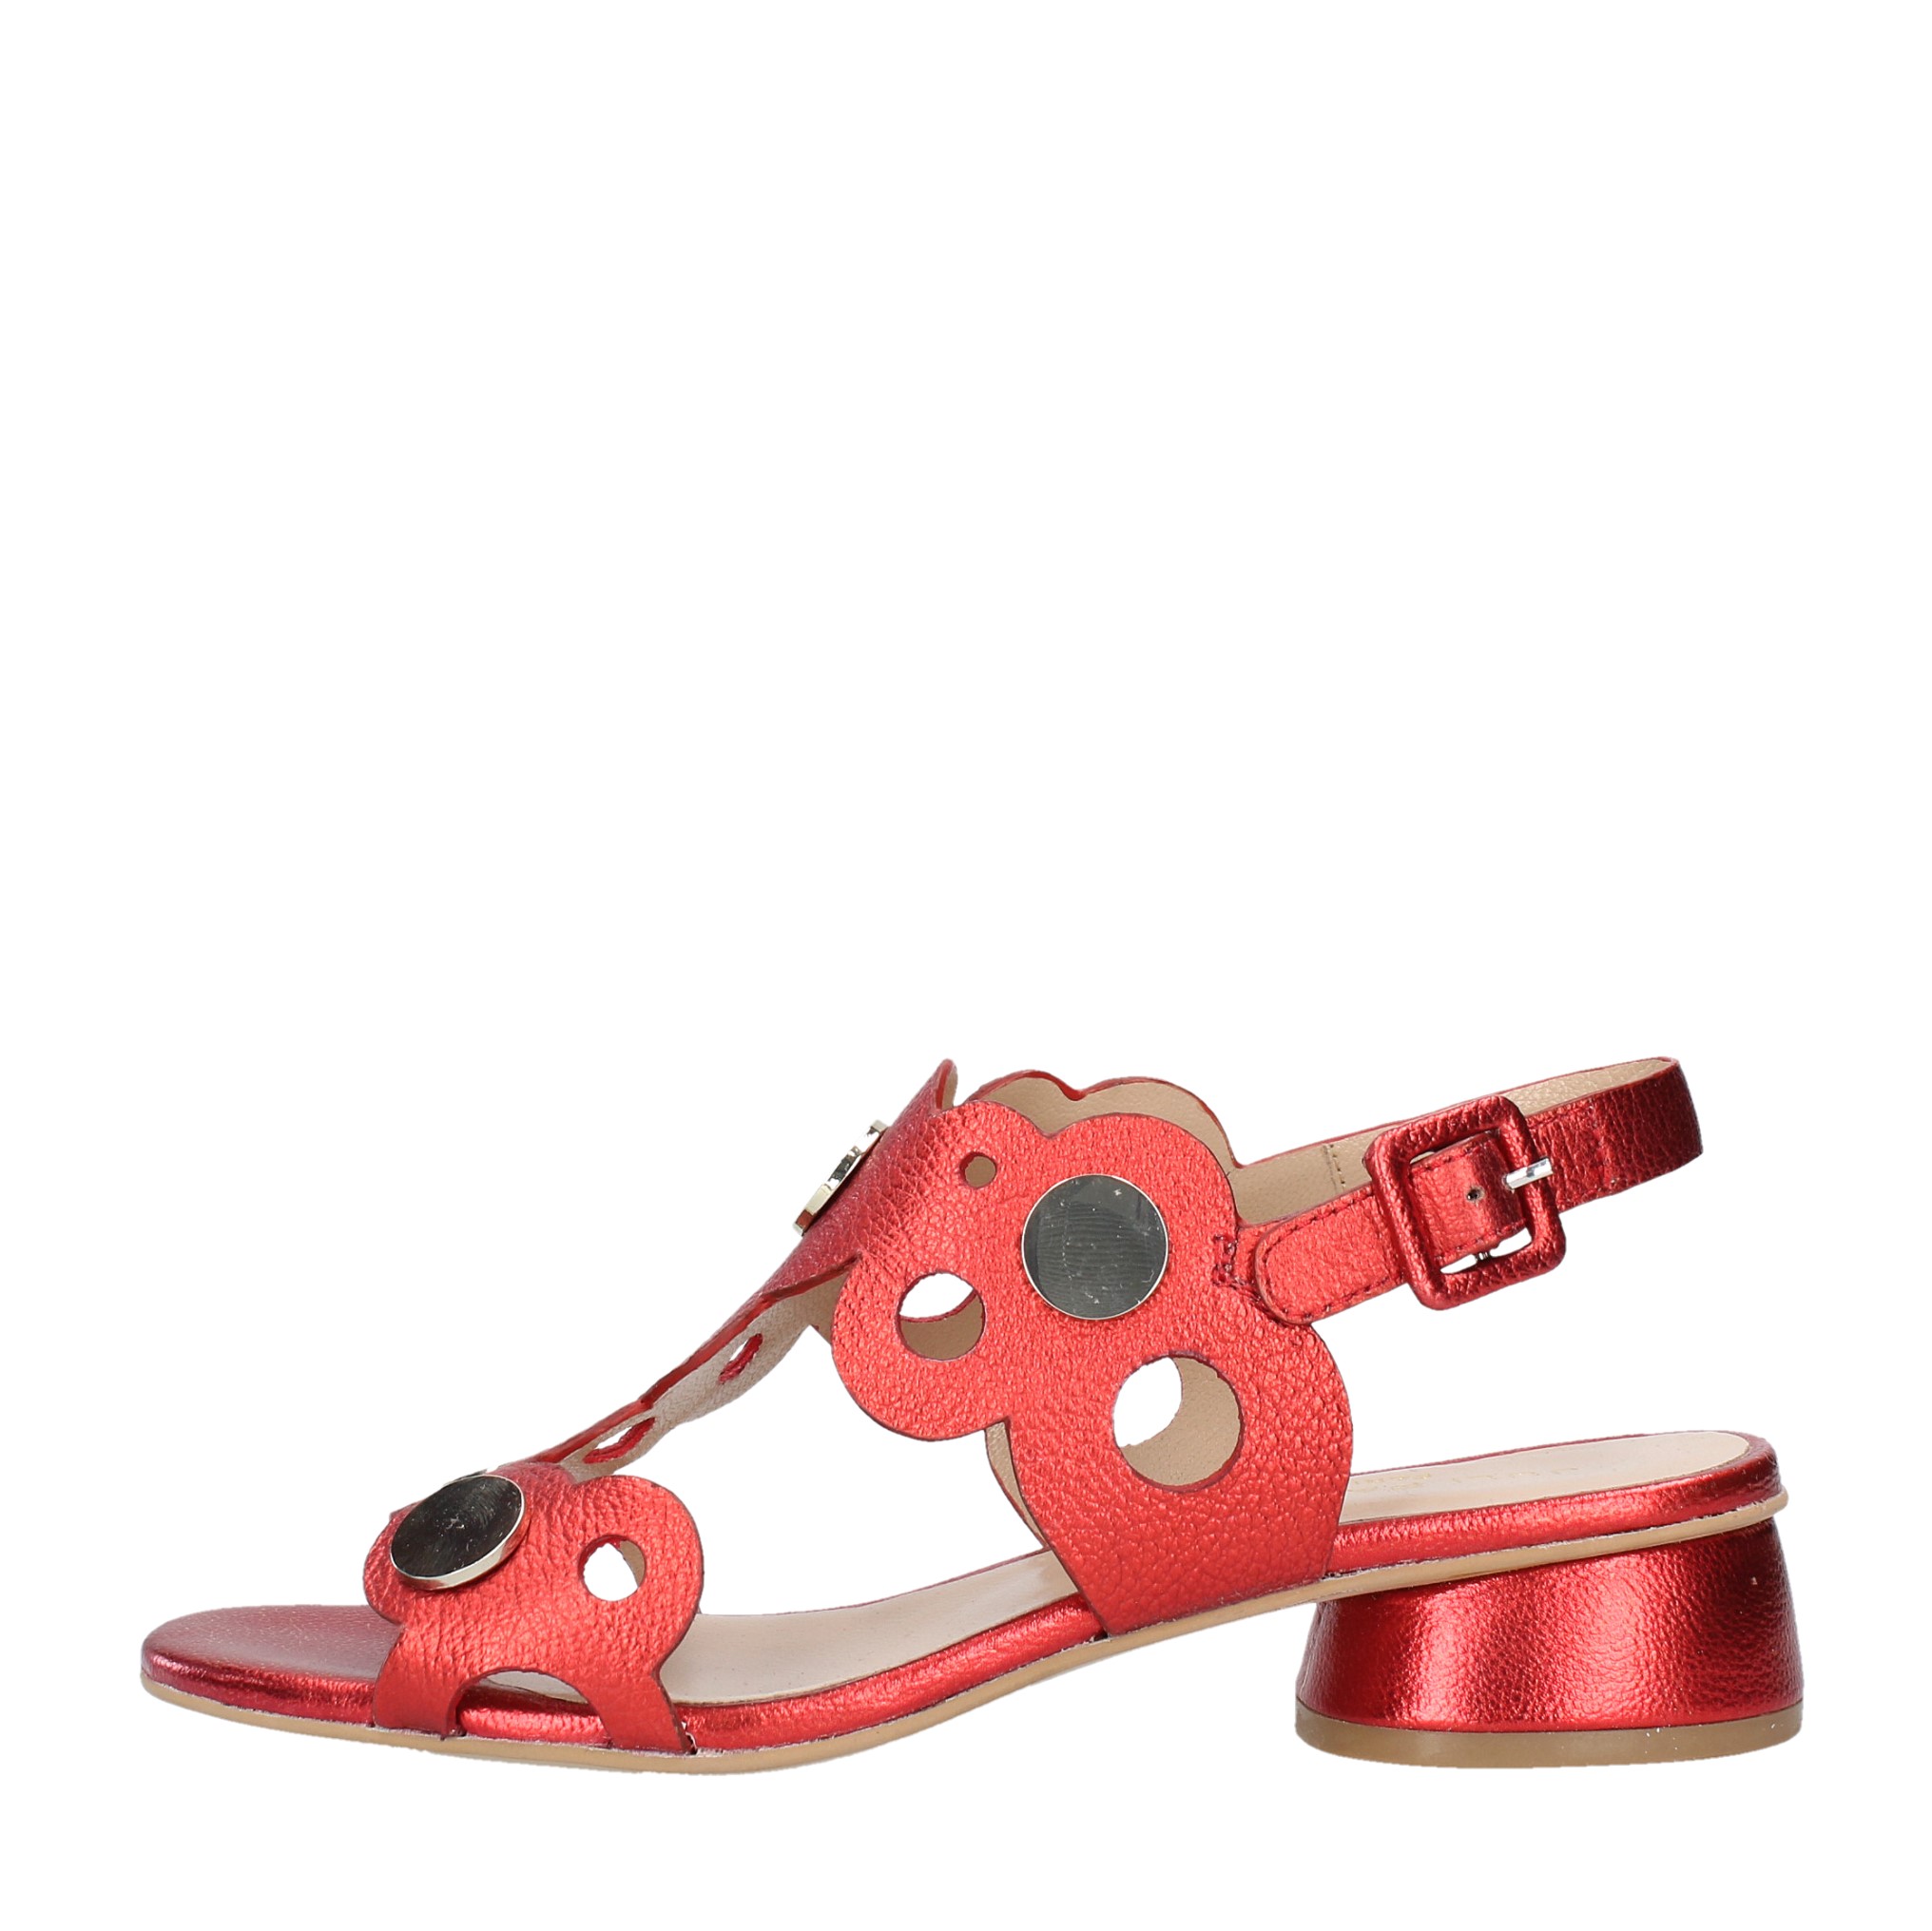 Sandals Red - JULI PASCAL - Ginevra calzature